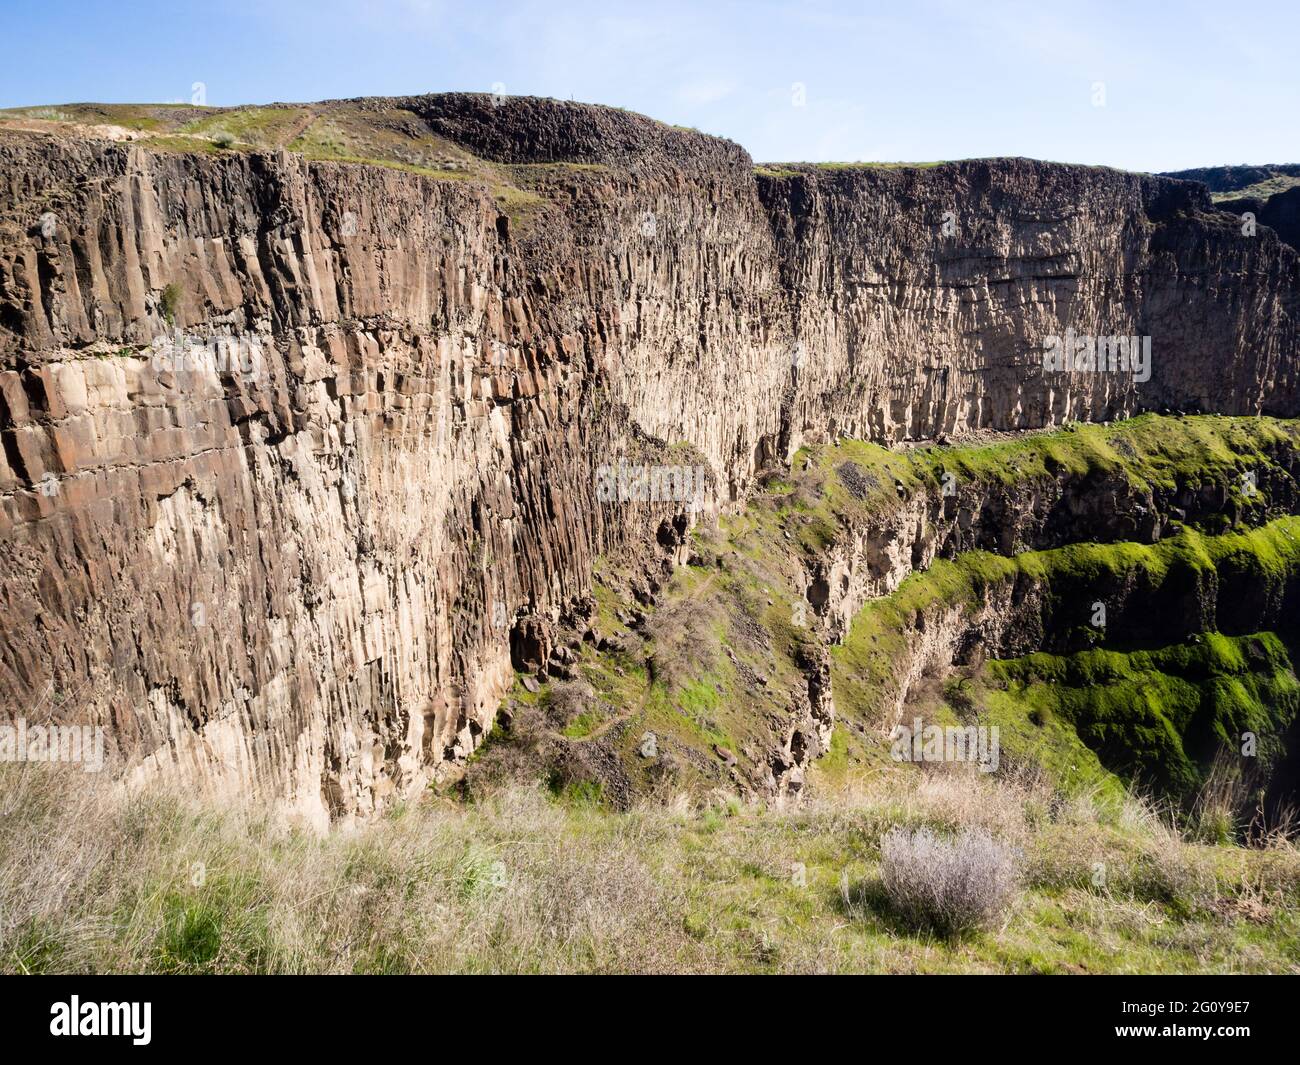 Basalt column rock formations at Palouse Falls, Washington state, USA, with hiking trail running along the canyon wall Stock Photo